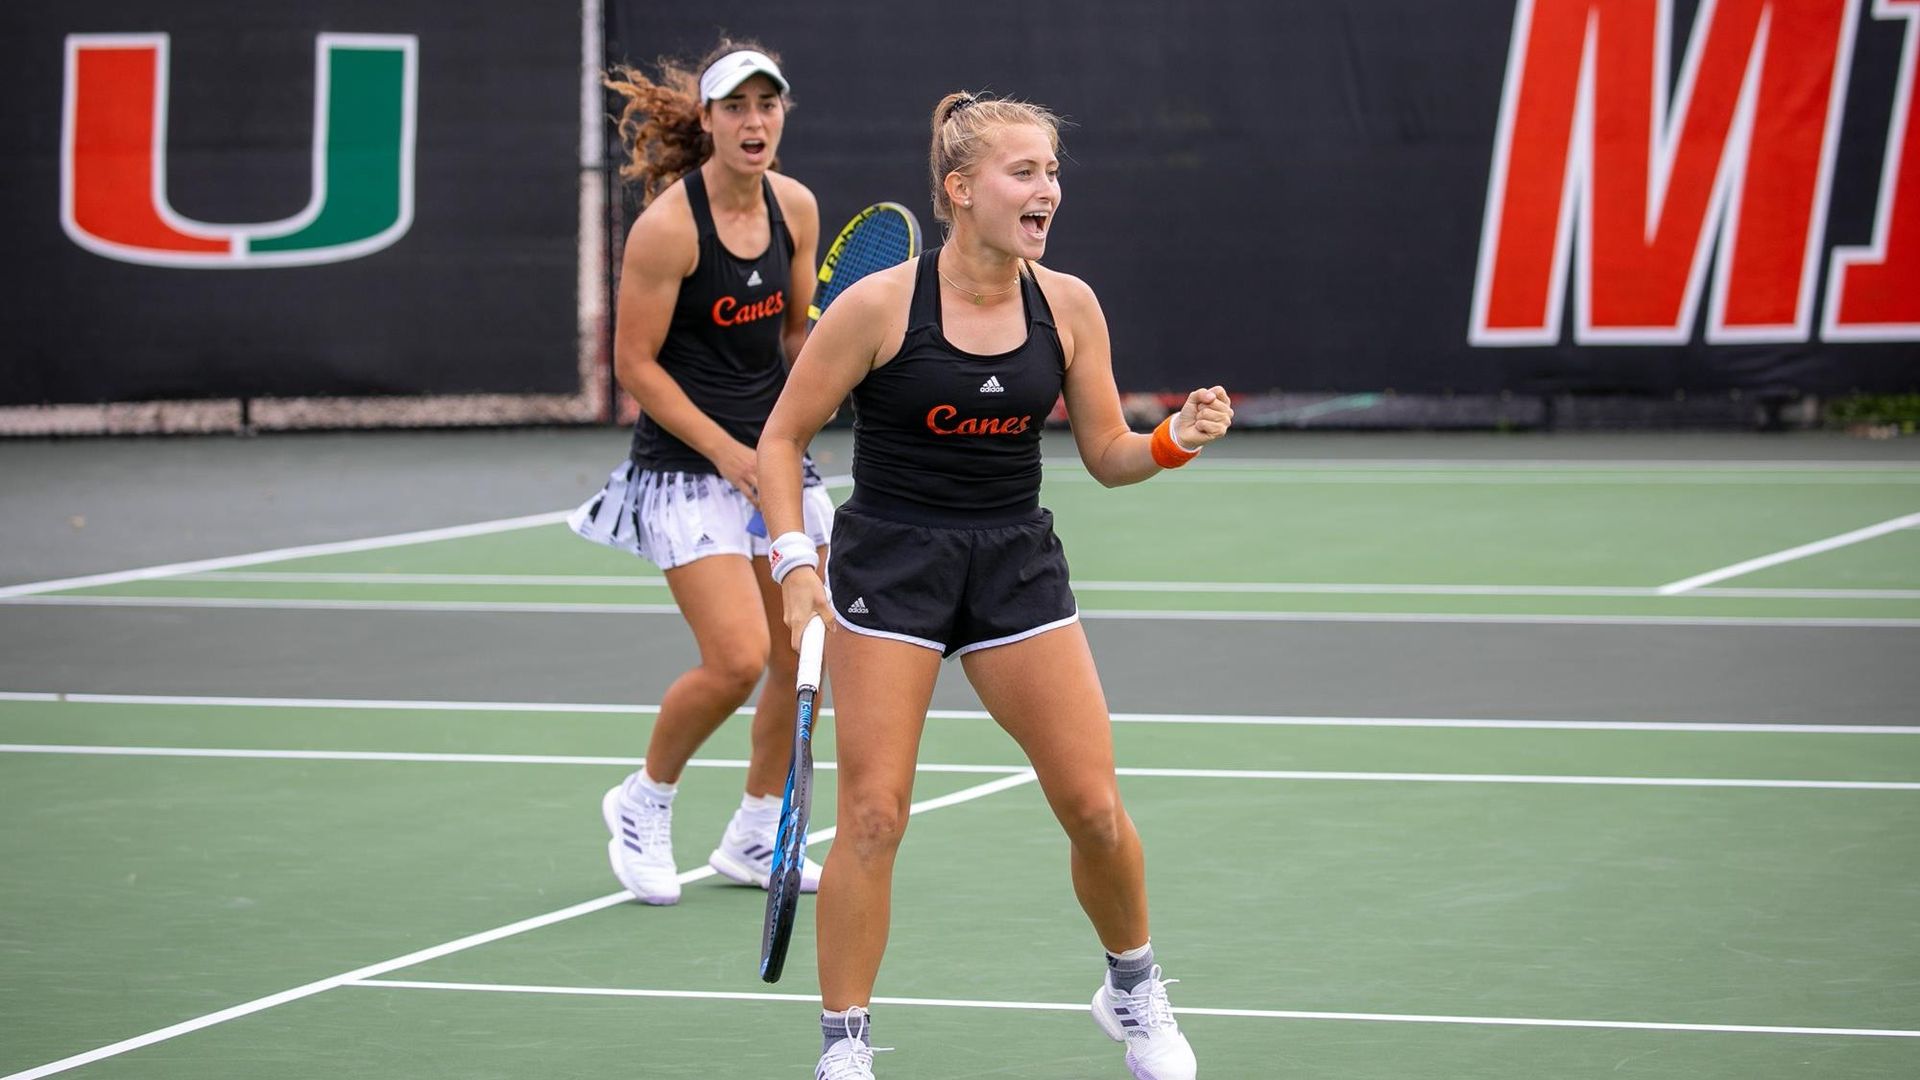 W. Tennis Sweeps No. 35 Virginia Tech, 7-0